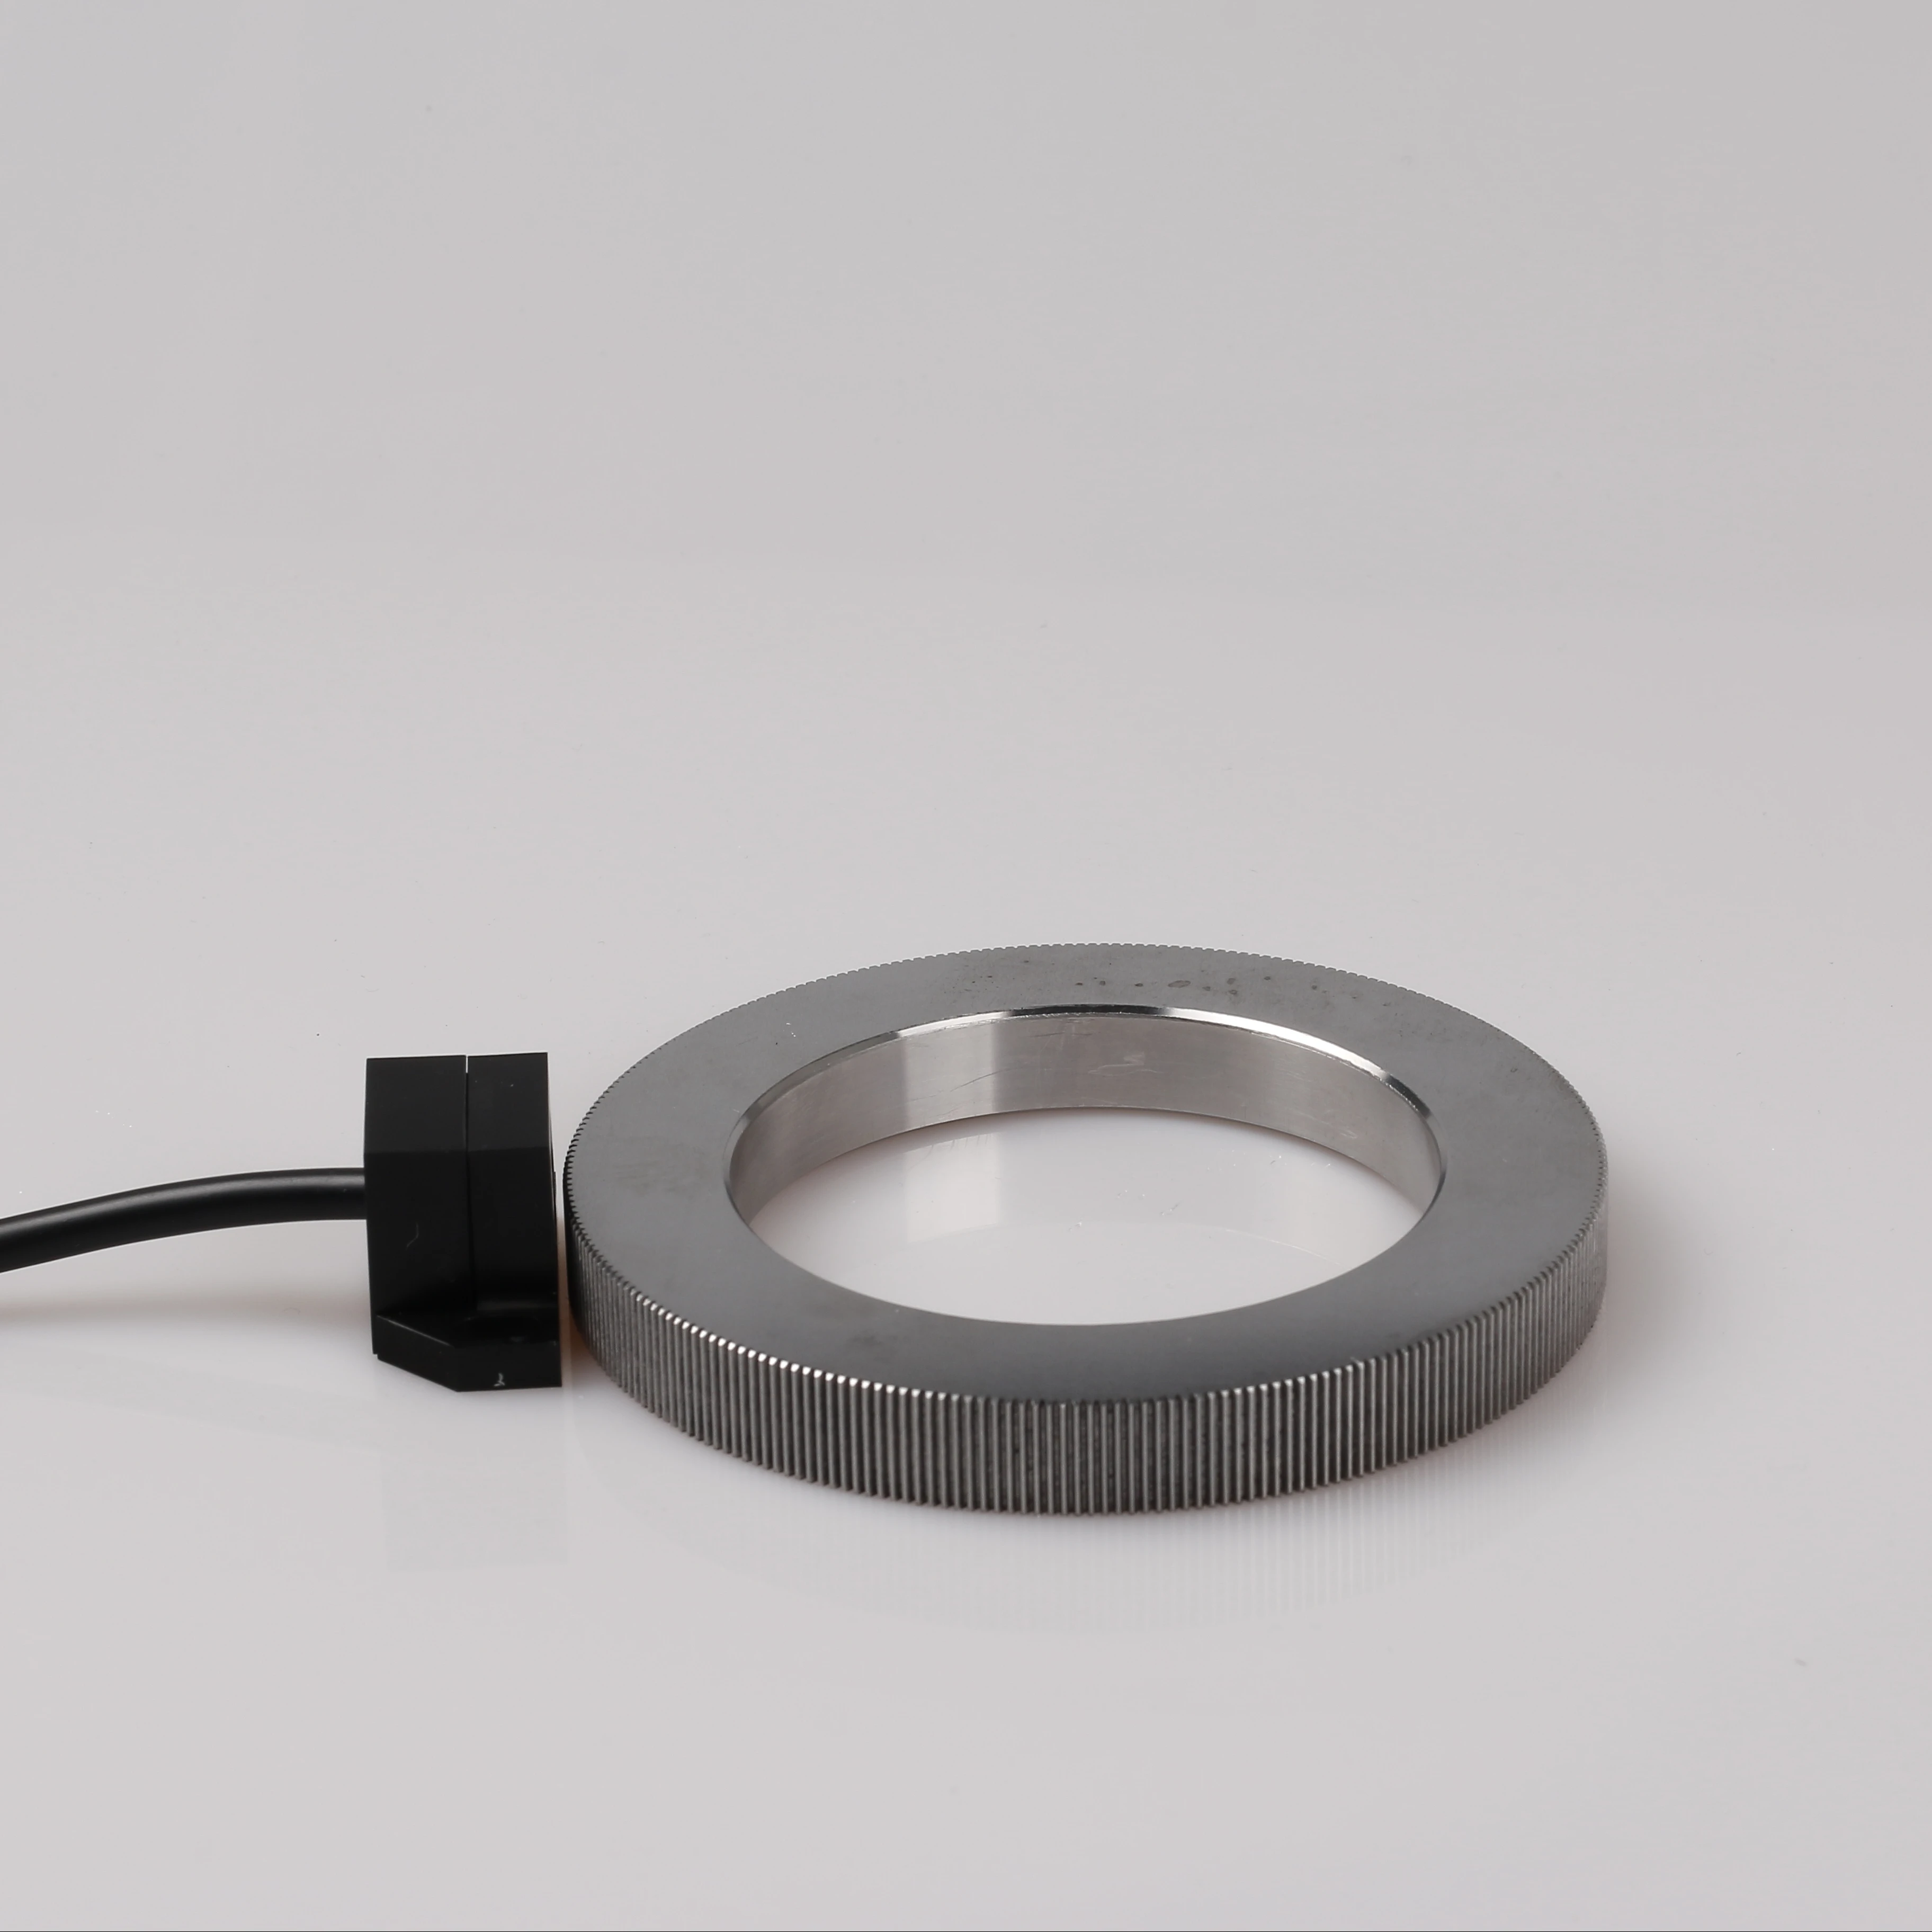 Factory low price spindle encoder optical speed sensor position sensor 0.4 modulus (60802356230)